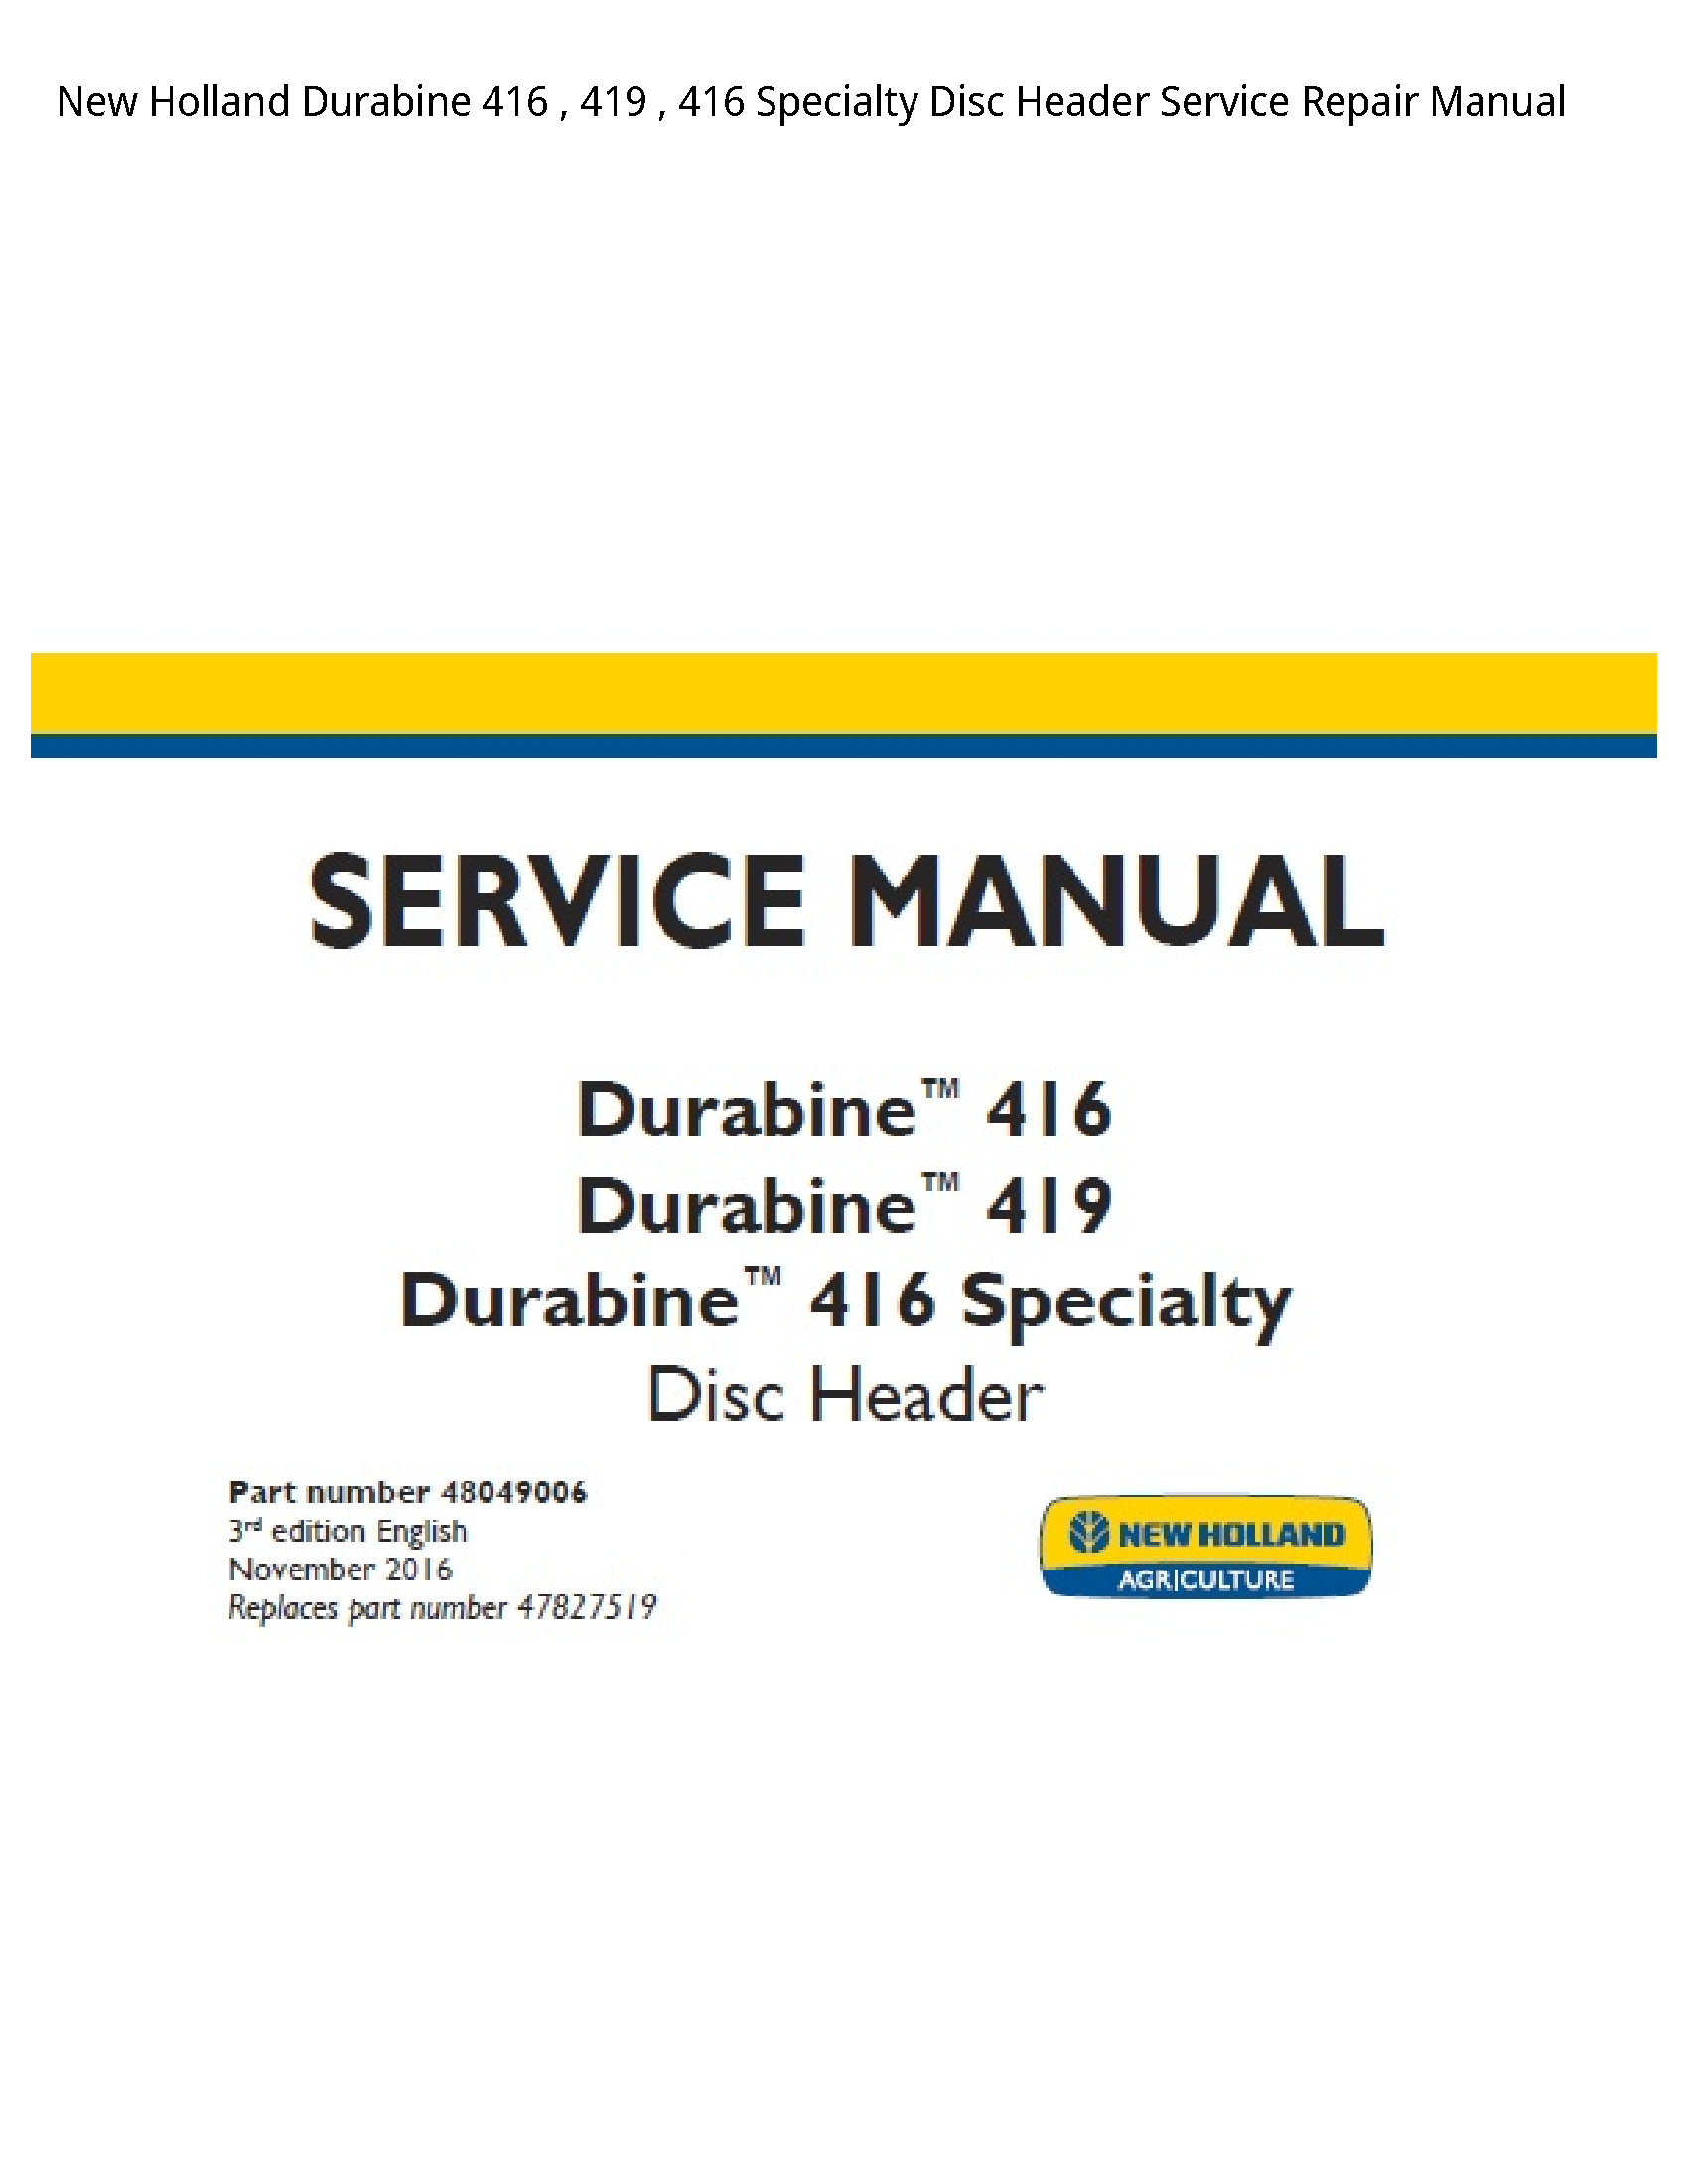 New Holland 416 Durabine Specialty Disc Header manual